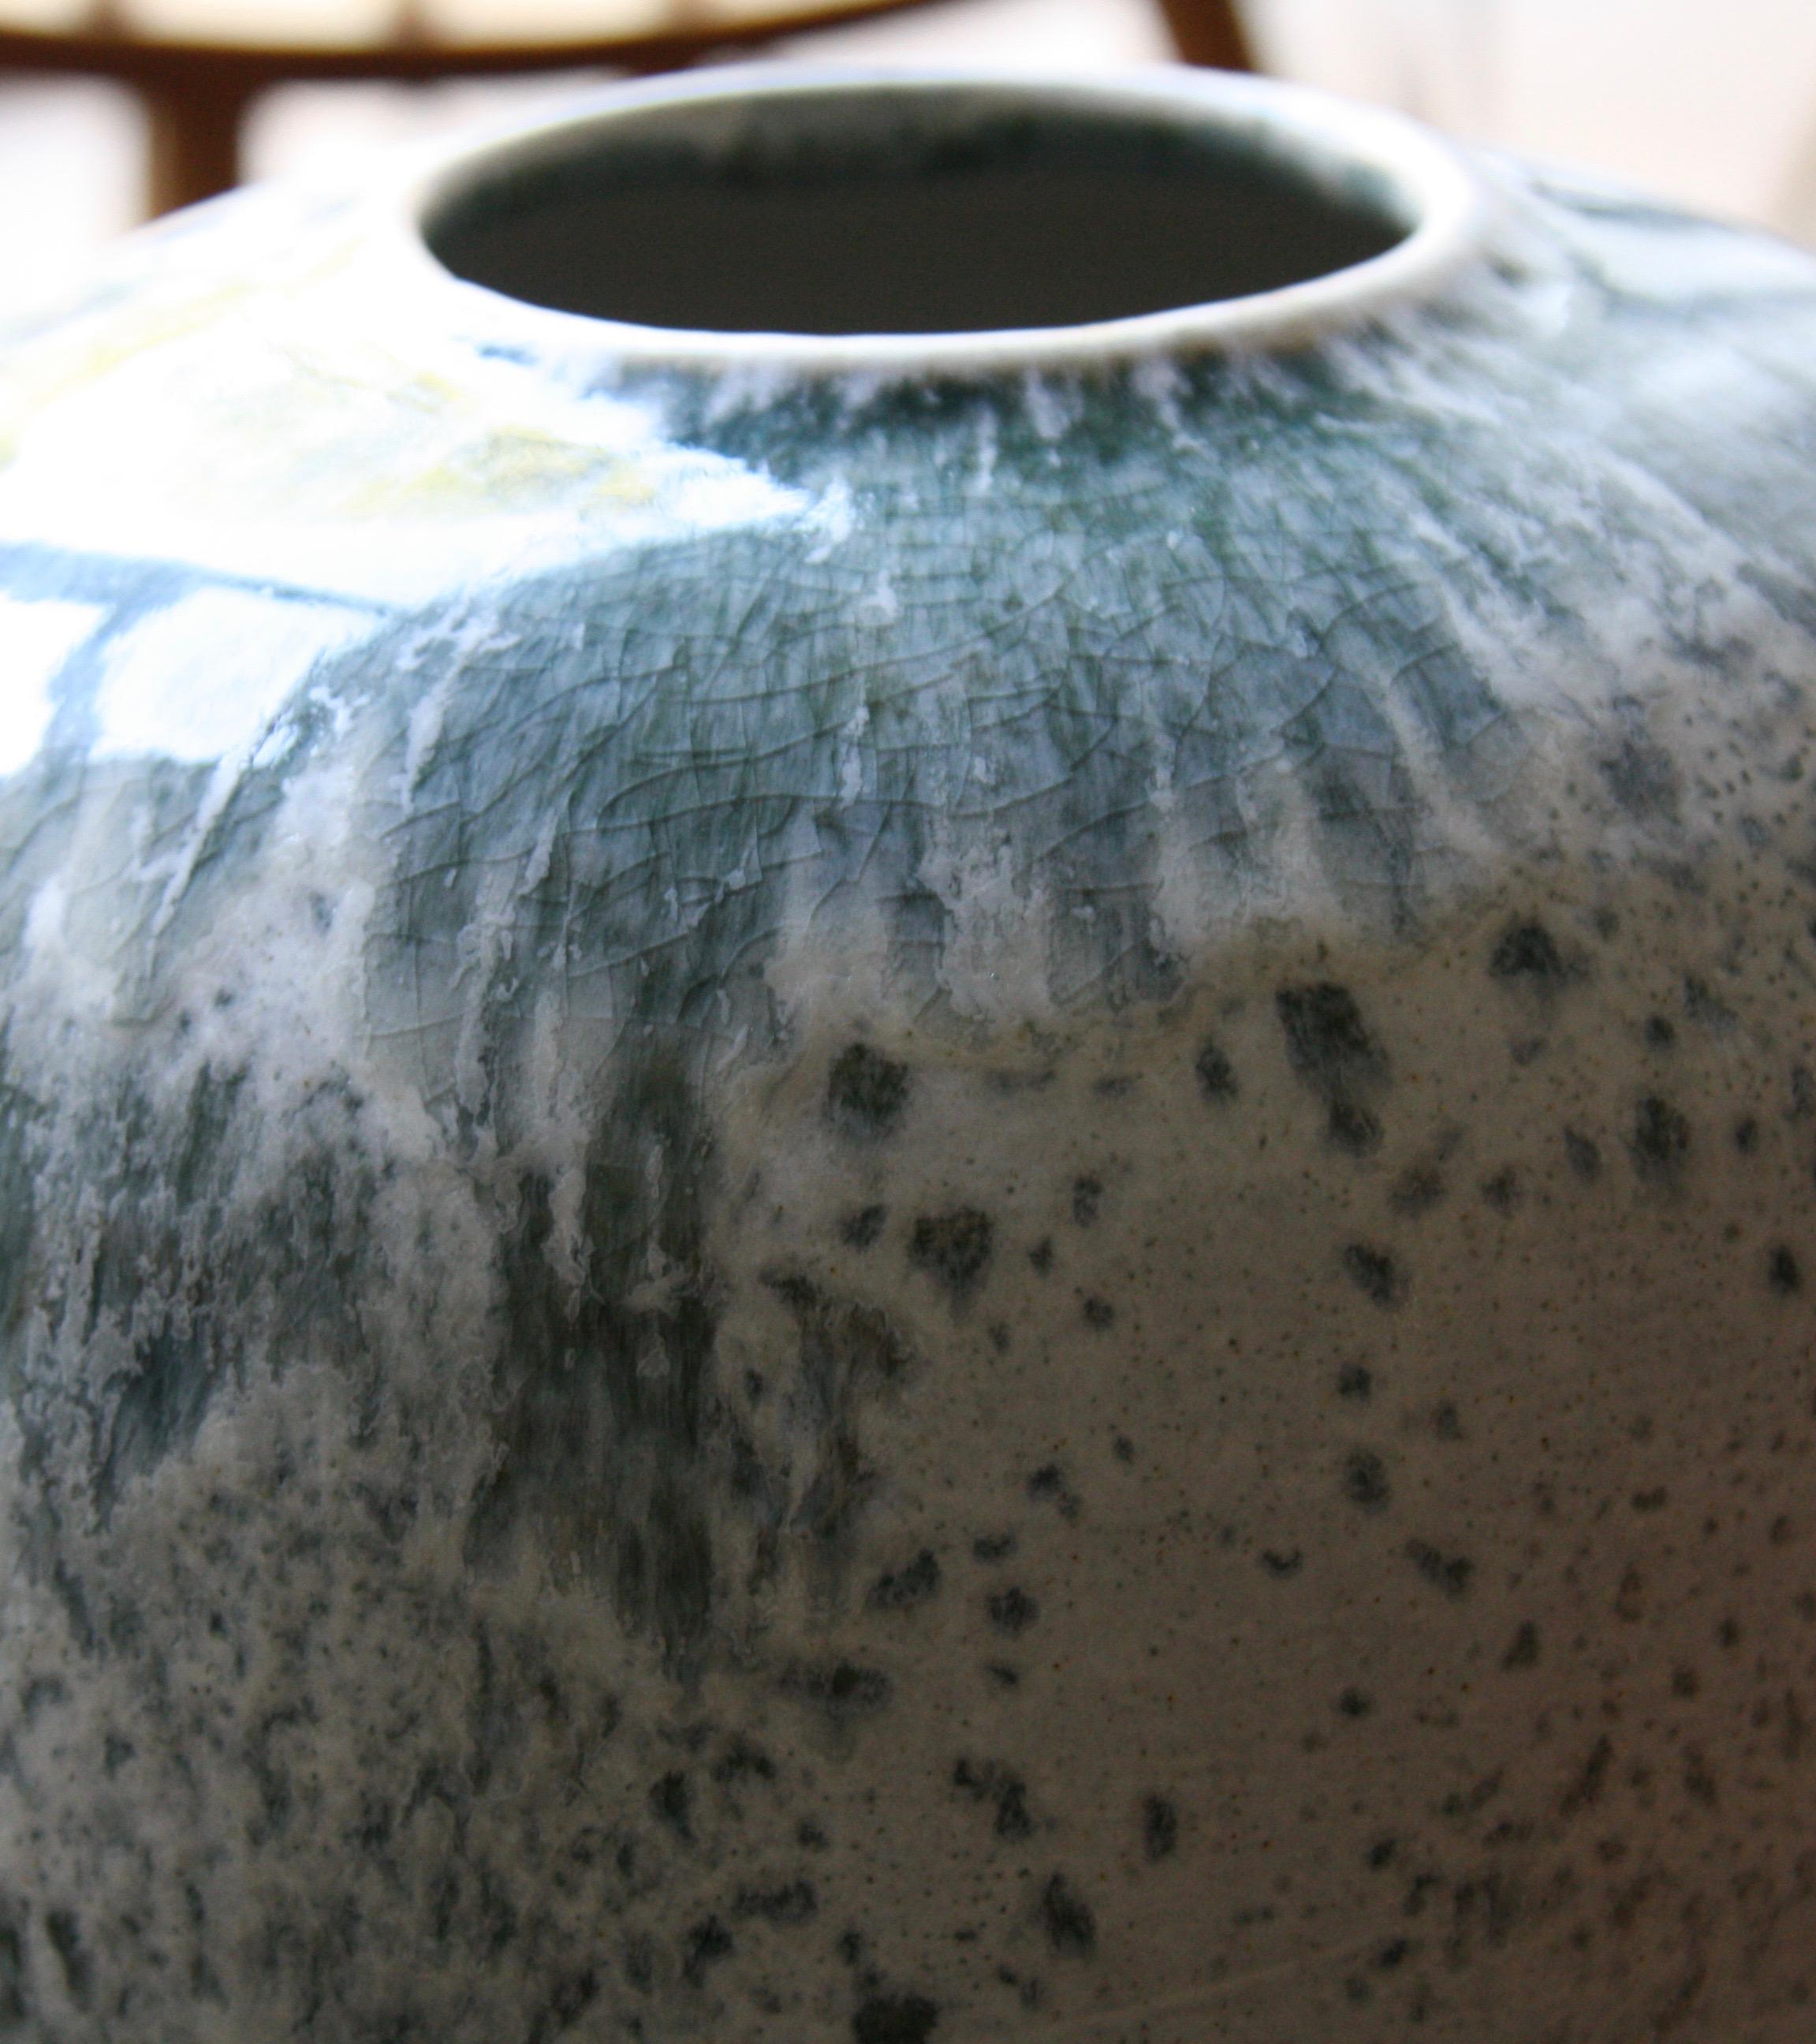 Kasper Würtz One Off Stoneware 'Rising Balloon' Vase #1 Blue and White Glaze 2